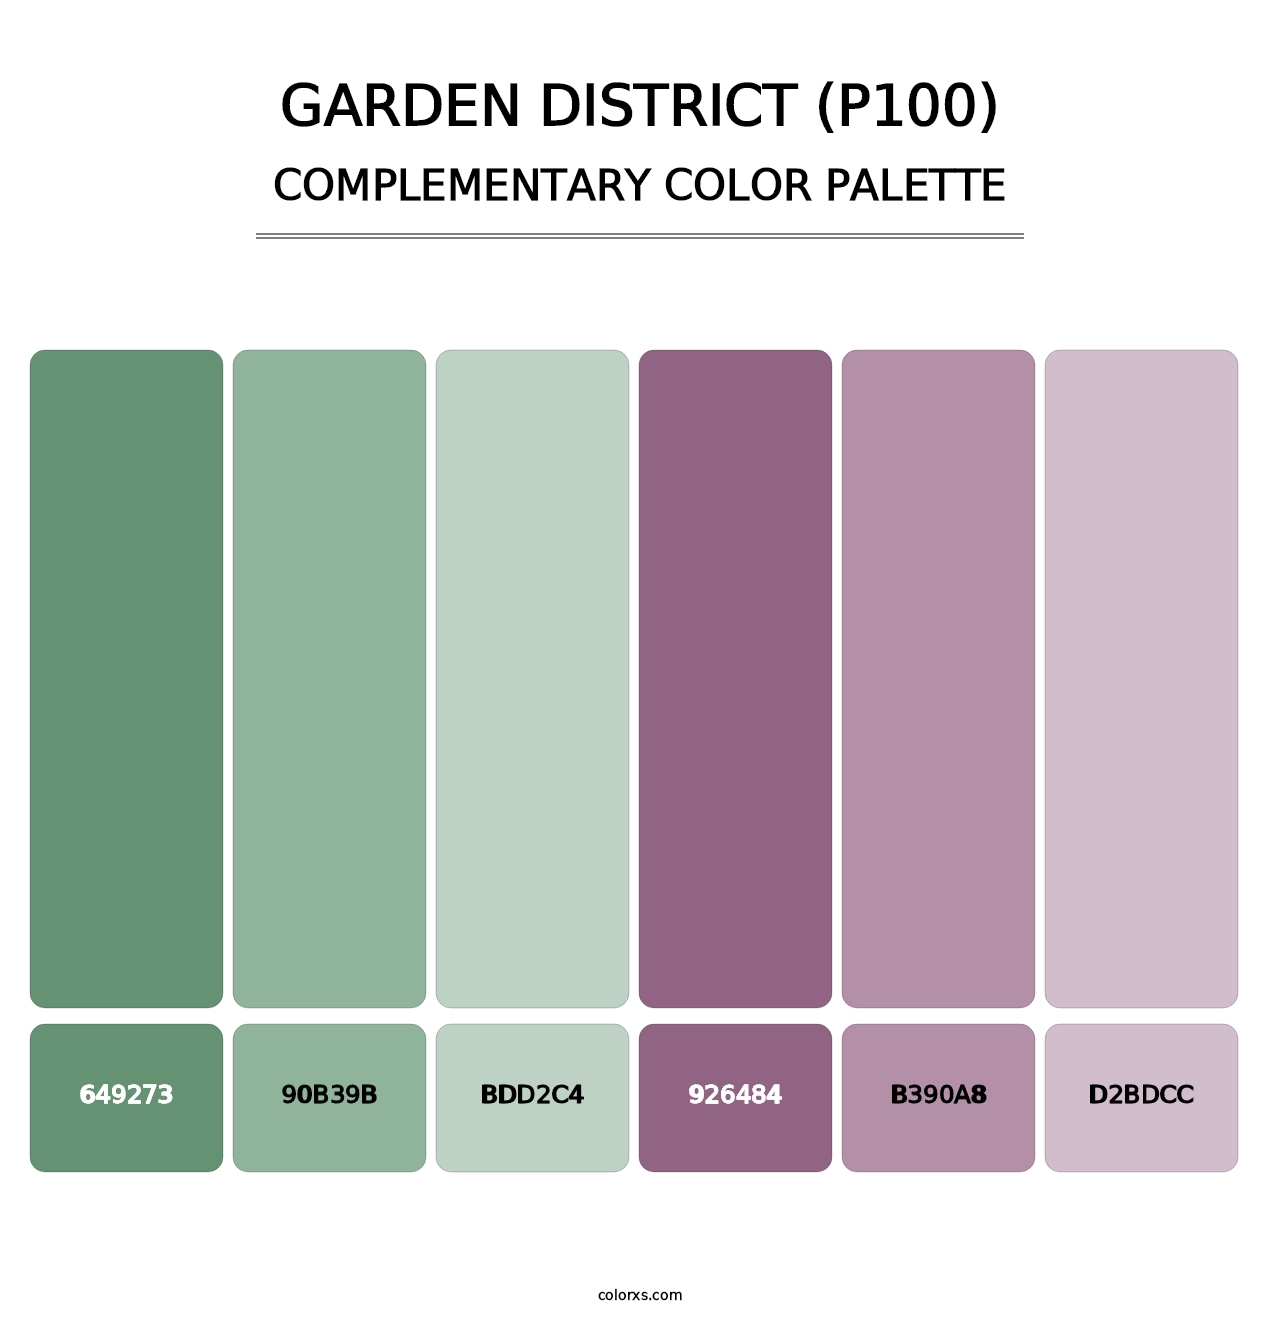 Garden District (P100) - Complementary Color Palette